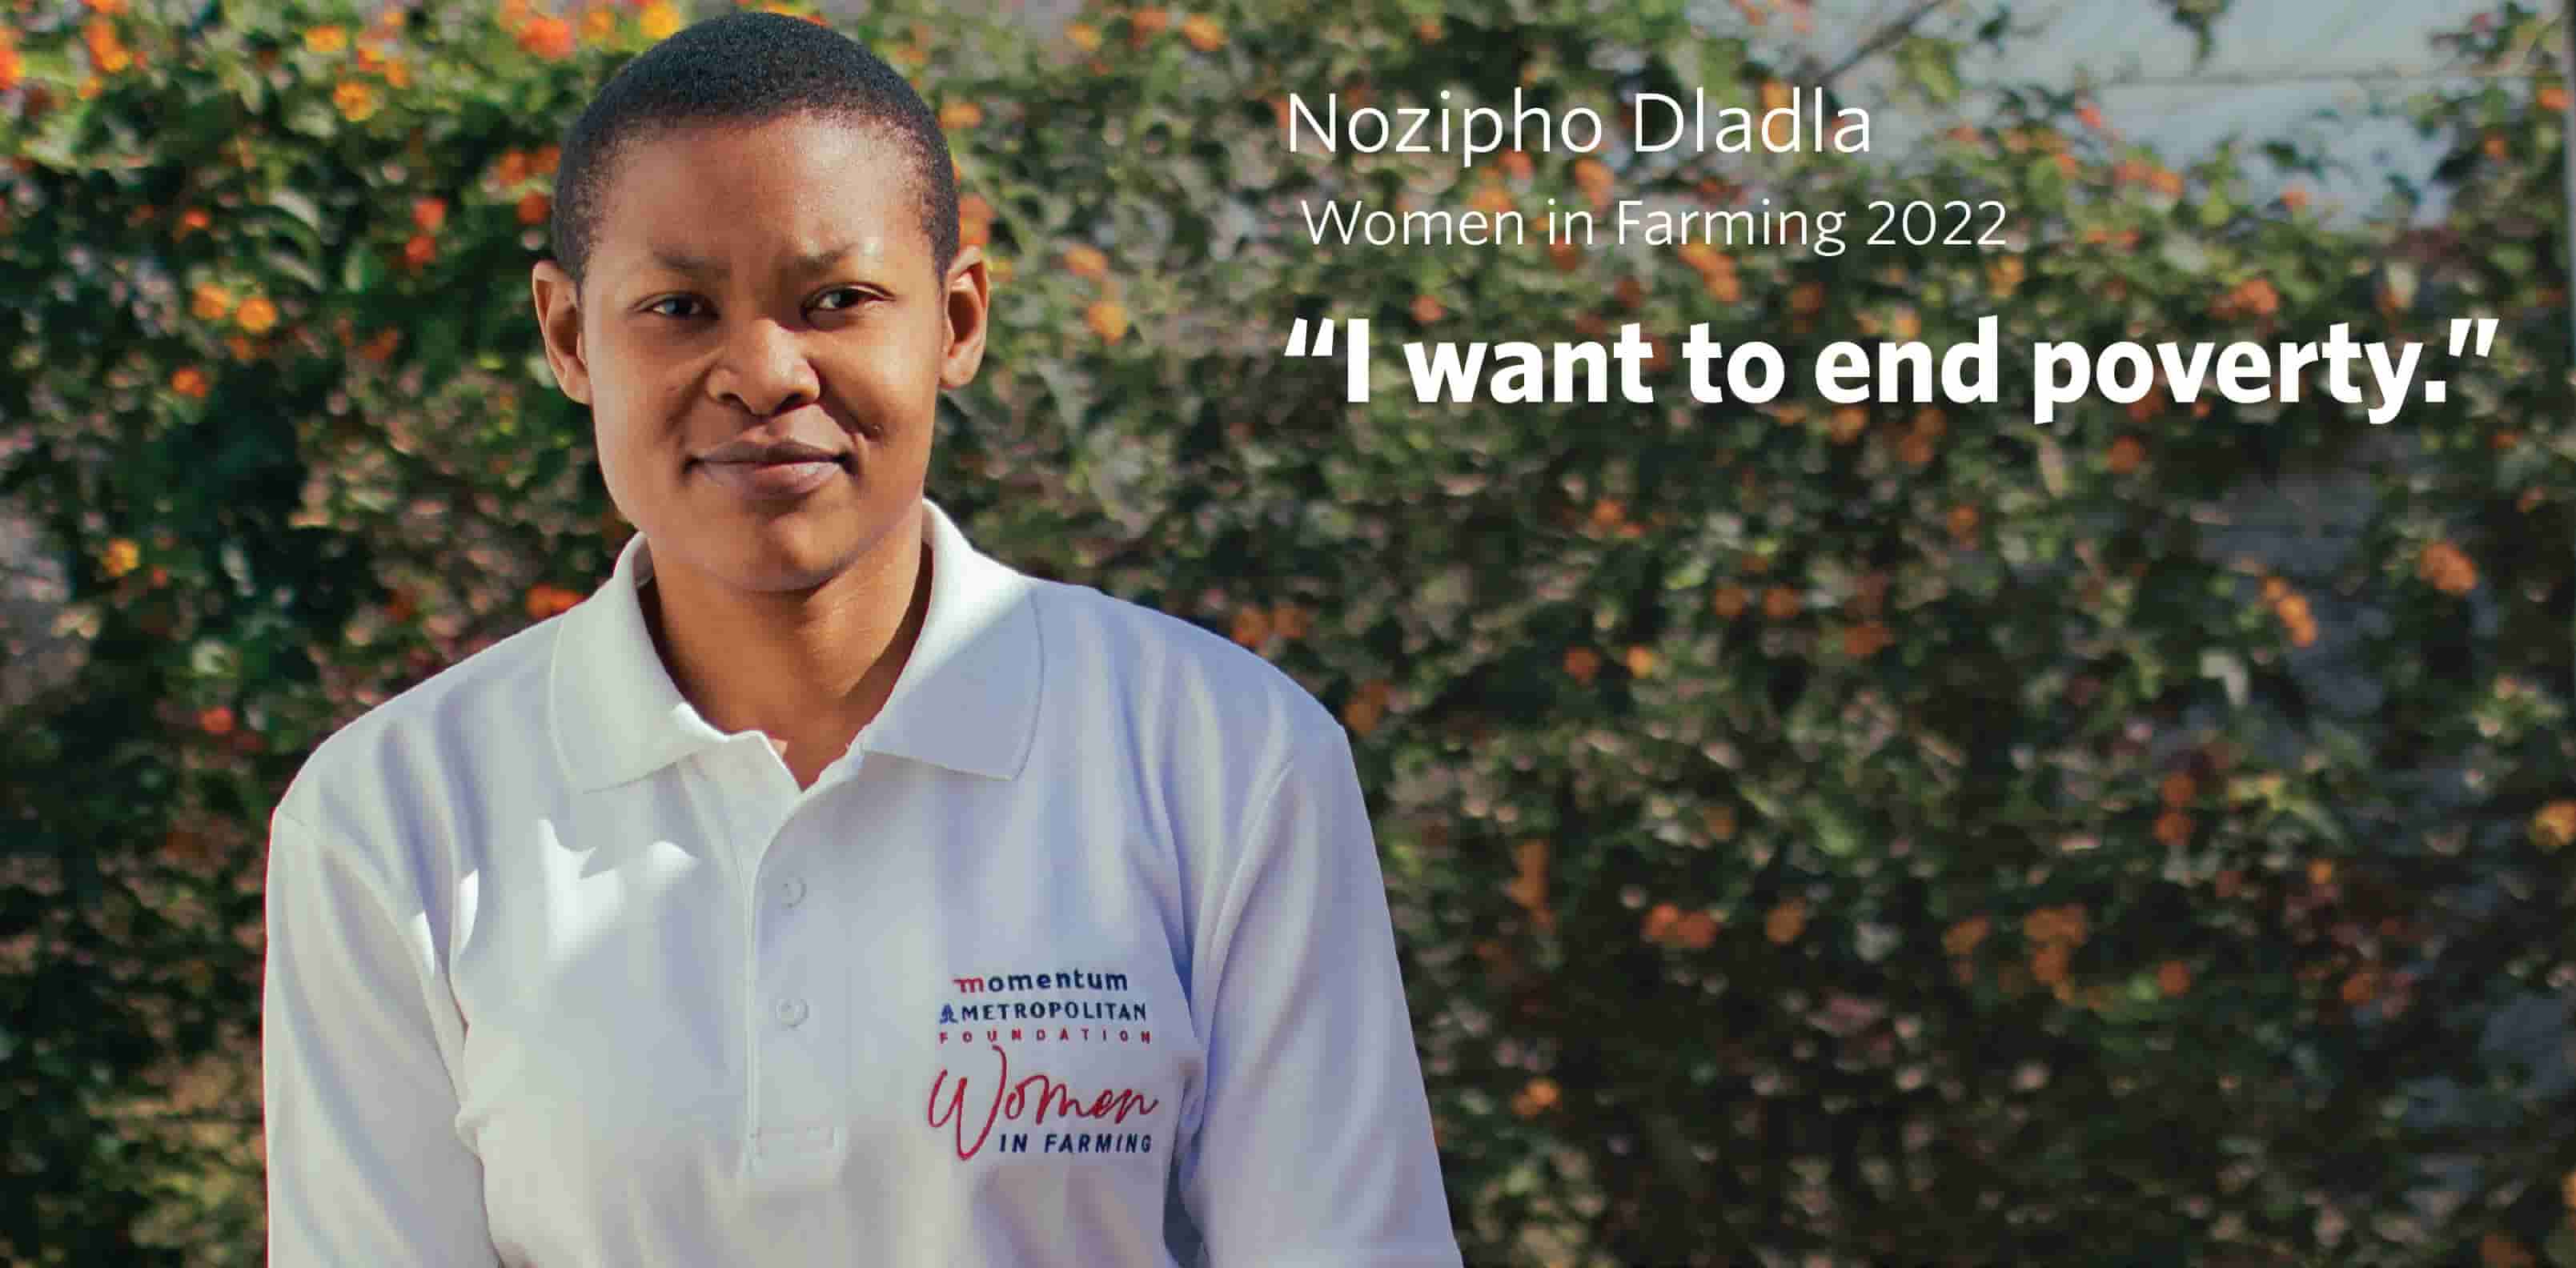 Nozipho Dladla, Momentum Metropolitan Foundation Women in Farming 2022 cohort